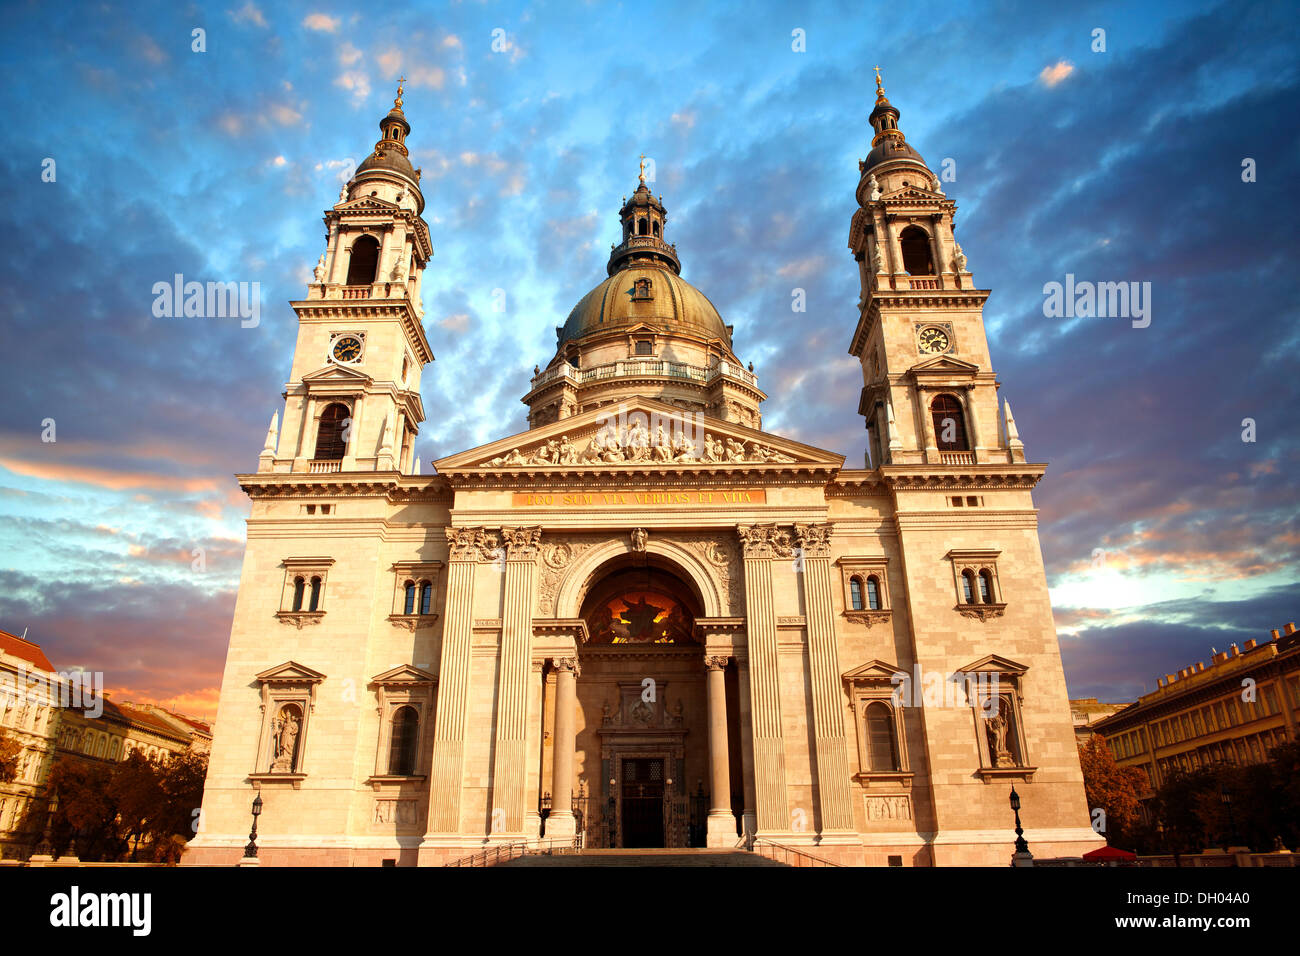 St Stephen's Basilica, Szent Istvan Bazilika, Neo Classical building, Budapest, Hungary, Europe Stock Photo